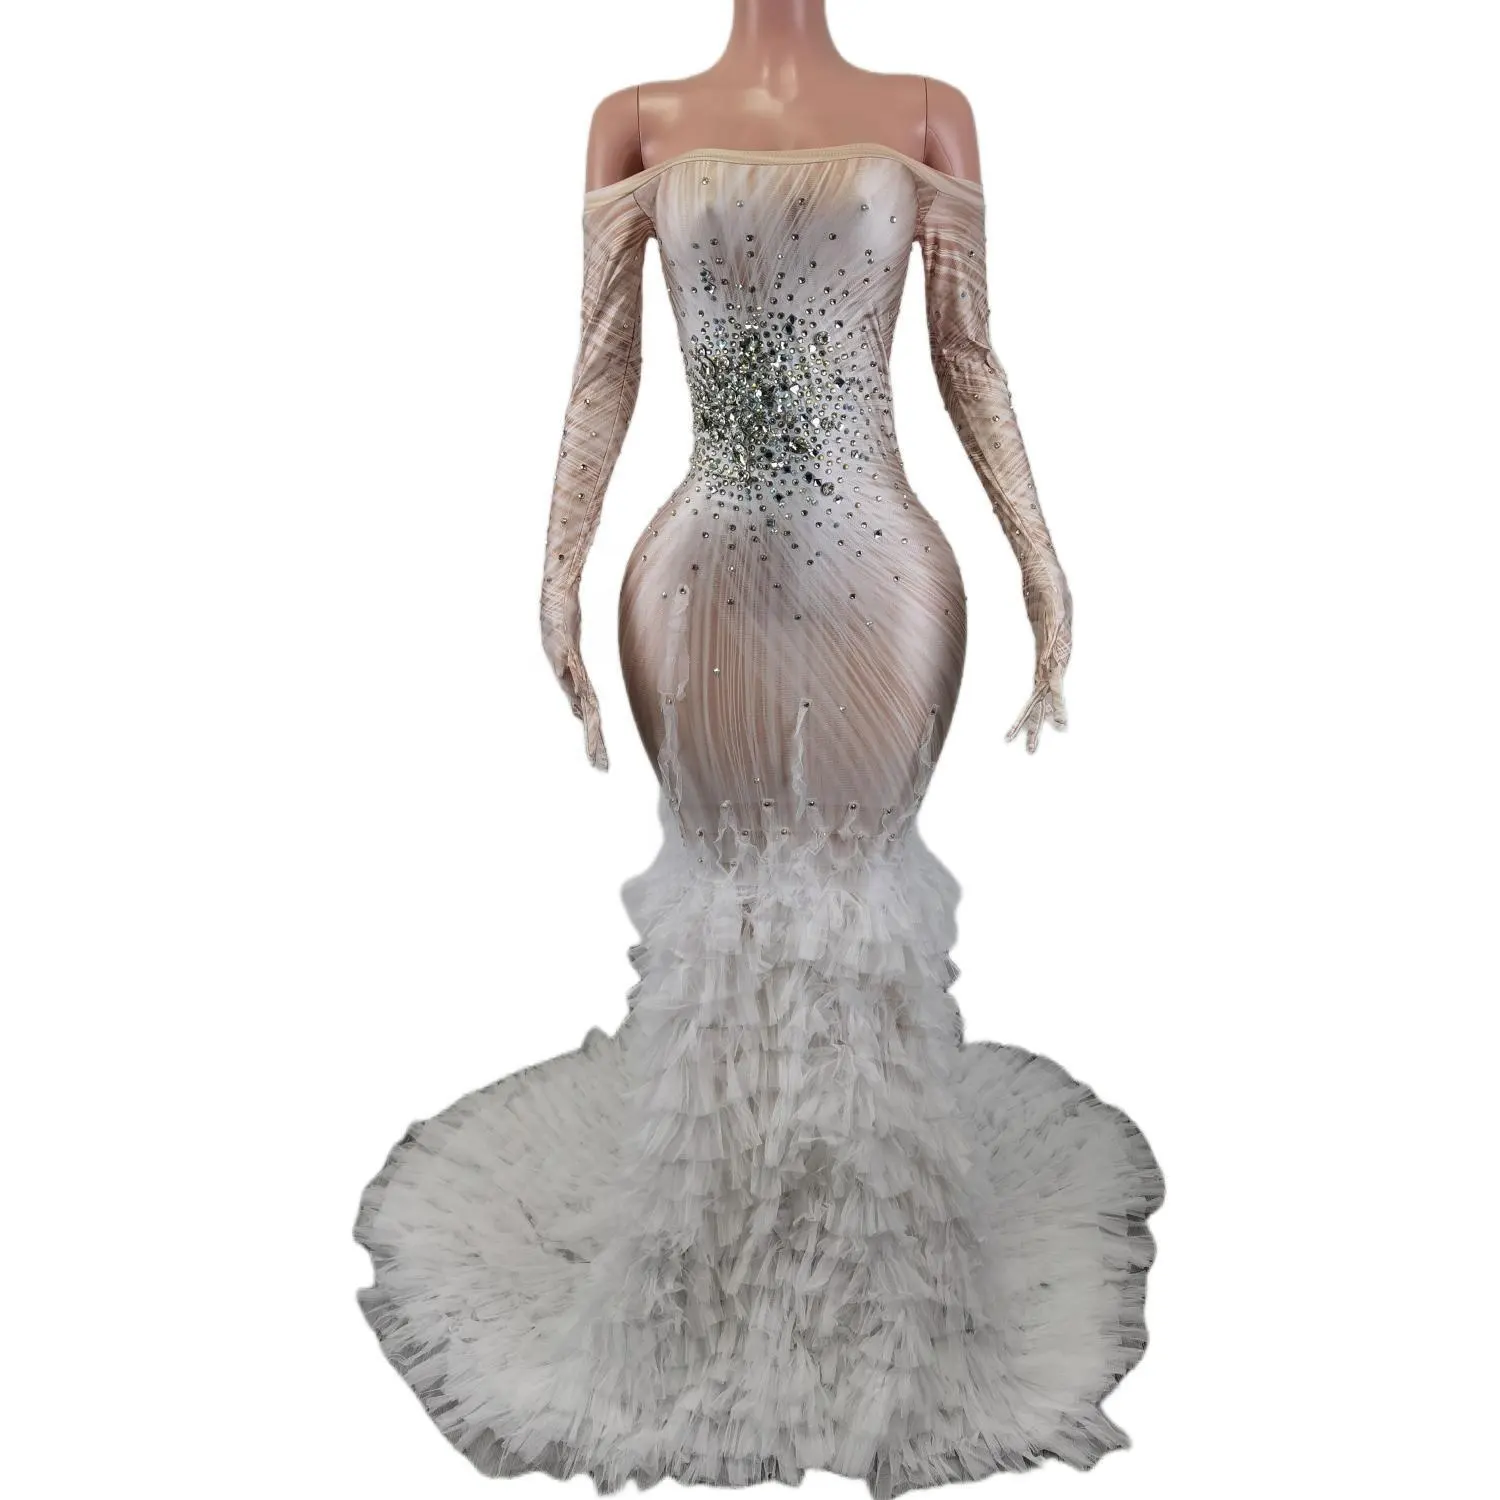 Elegant Diamond Ballชุดปิดไหล่งานแต่งงานวันเกิดชุดจัดเลี้ยงพรหมชุดผู้หญิงParty Mermaidชุดราตรี